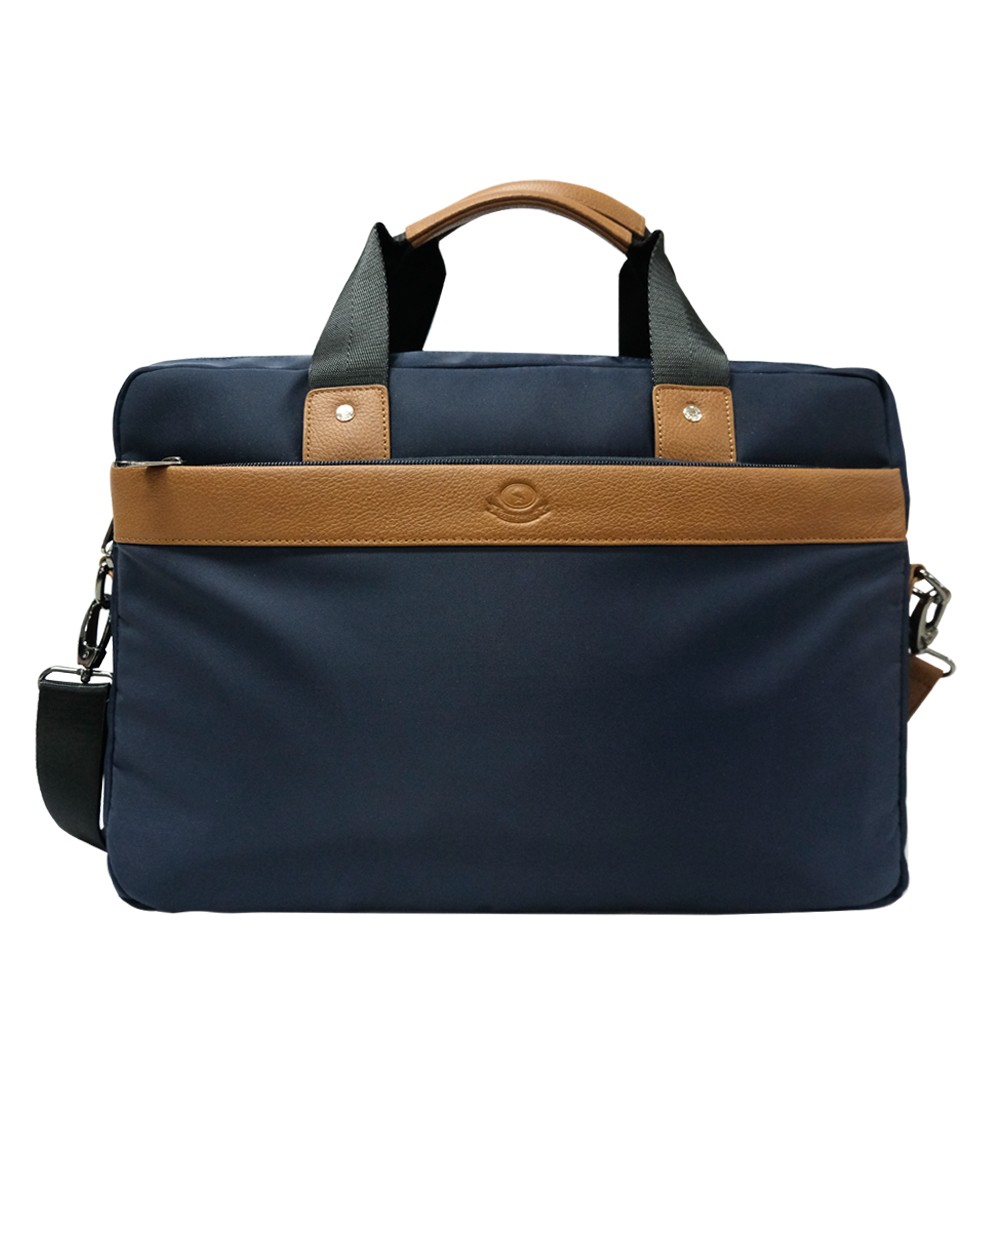 Clyfford-McJIM Messenger Bag